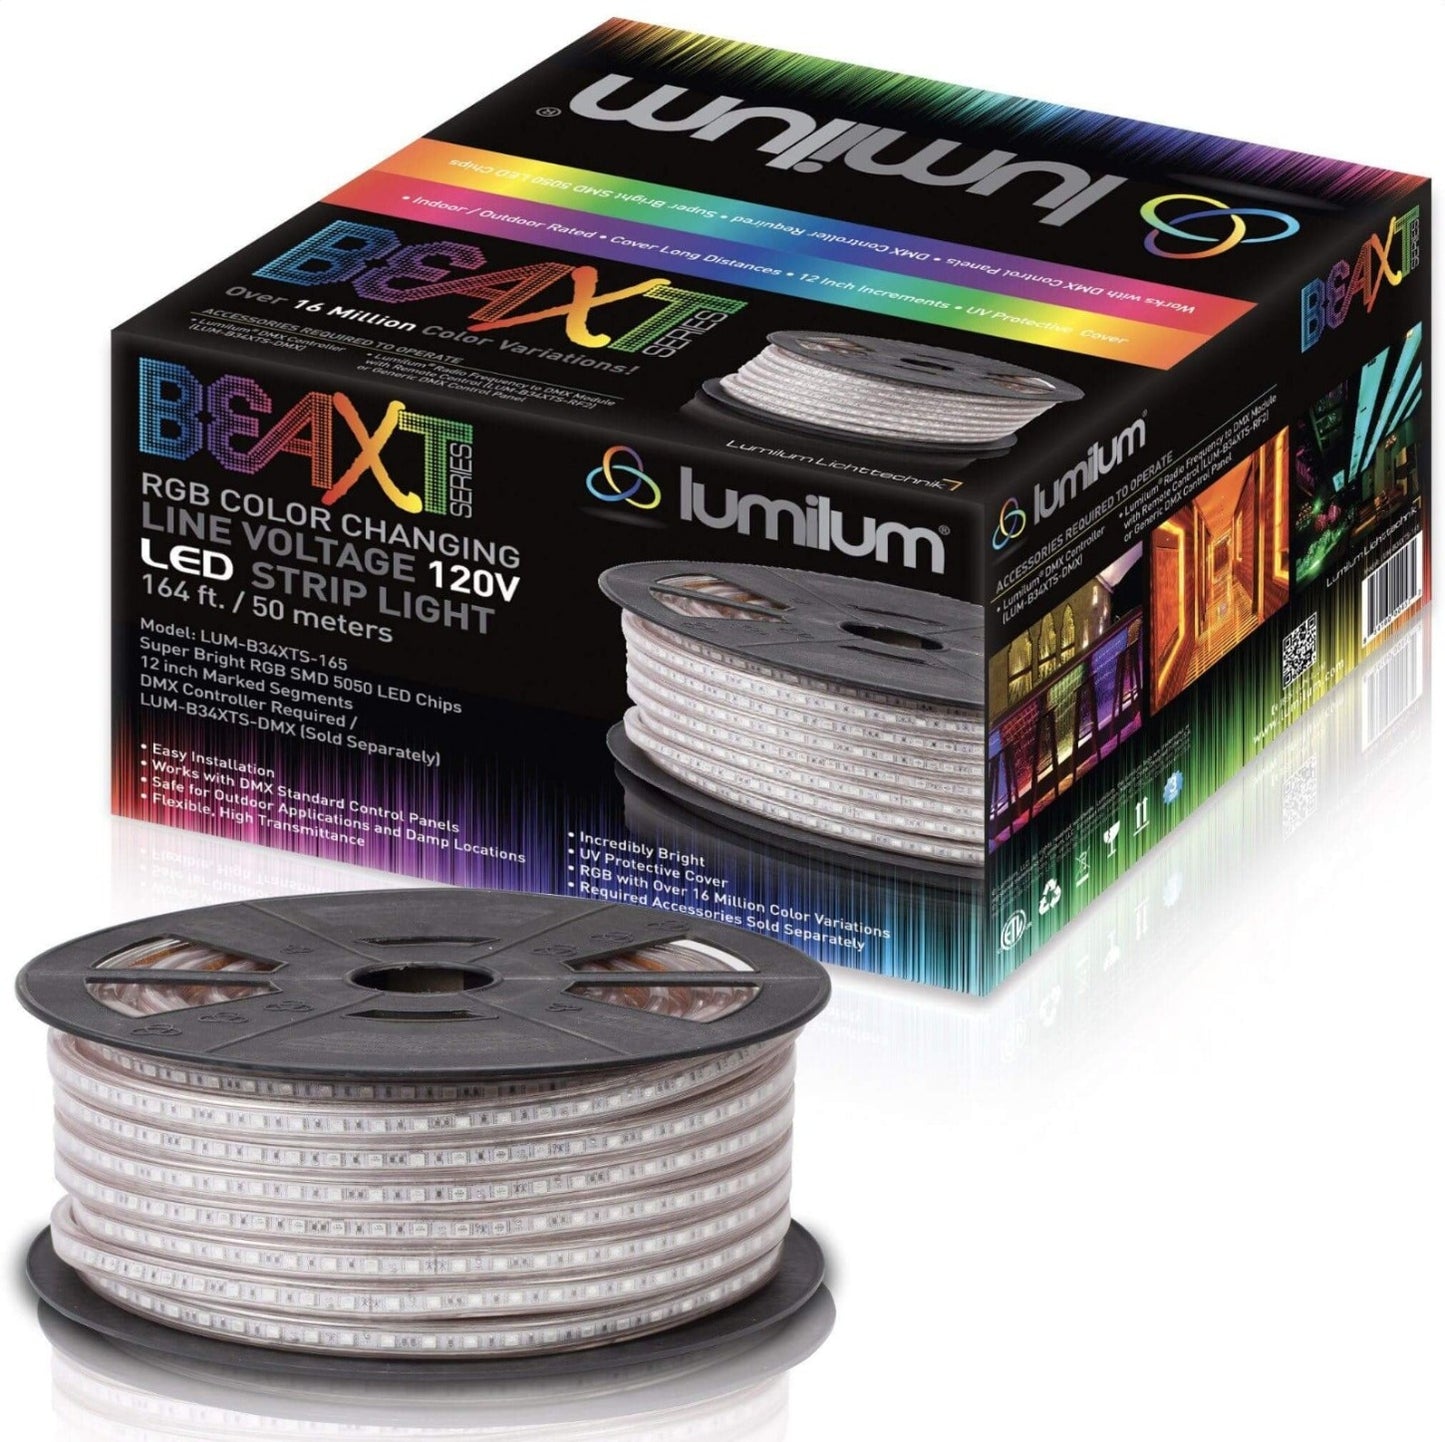 lumilum brand multicolored led strip light packaging next to led strip light reel